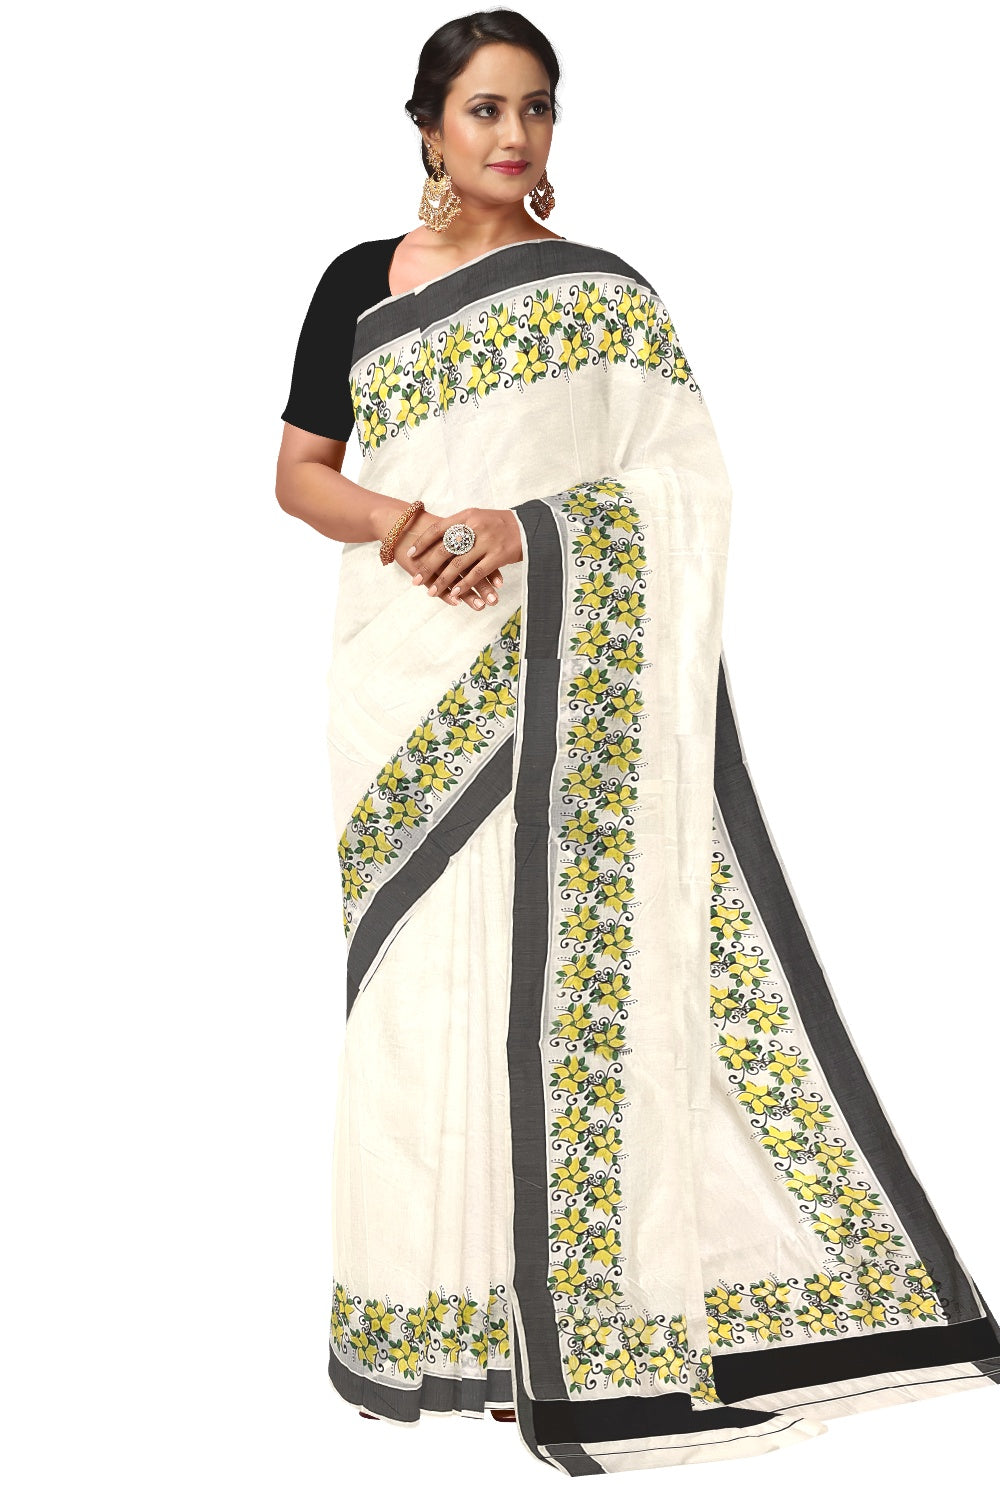 Pure Cotton Kerala Saree with Floral Block Printed and Black Border